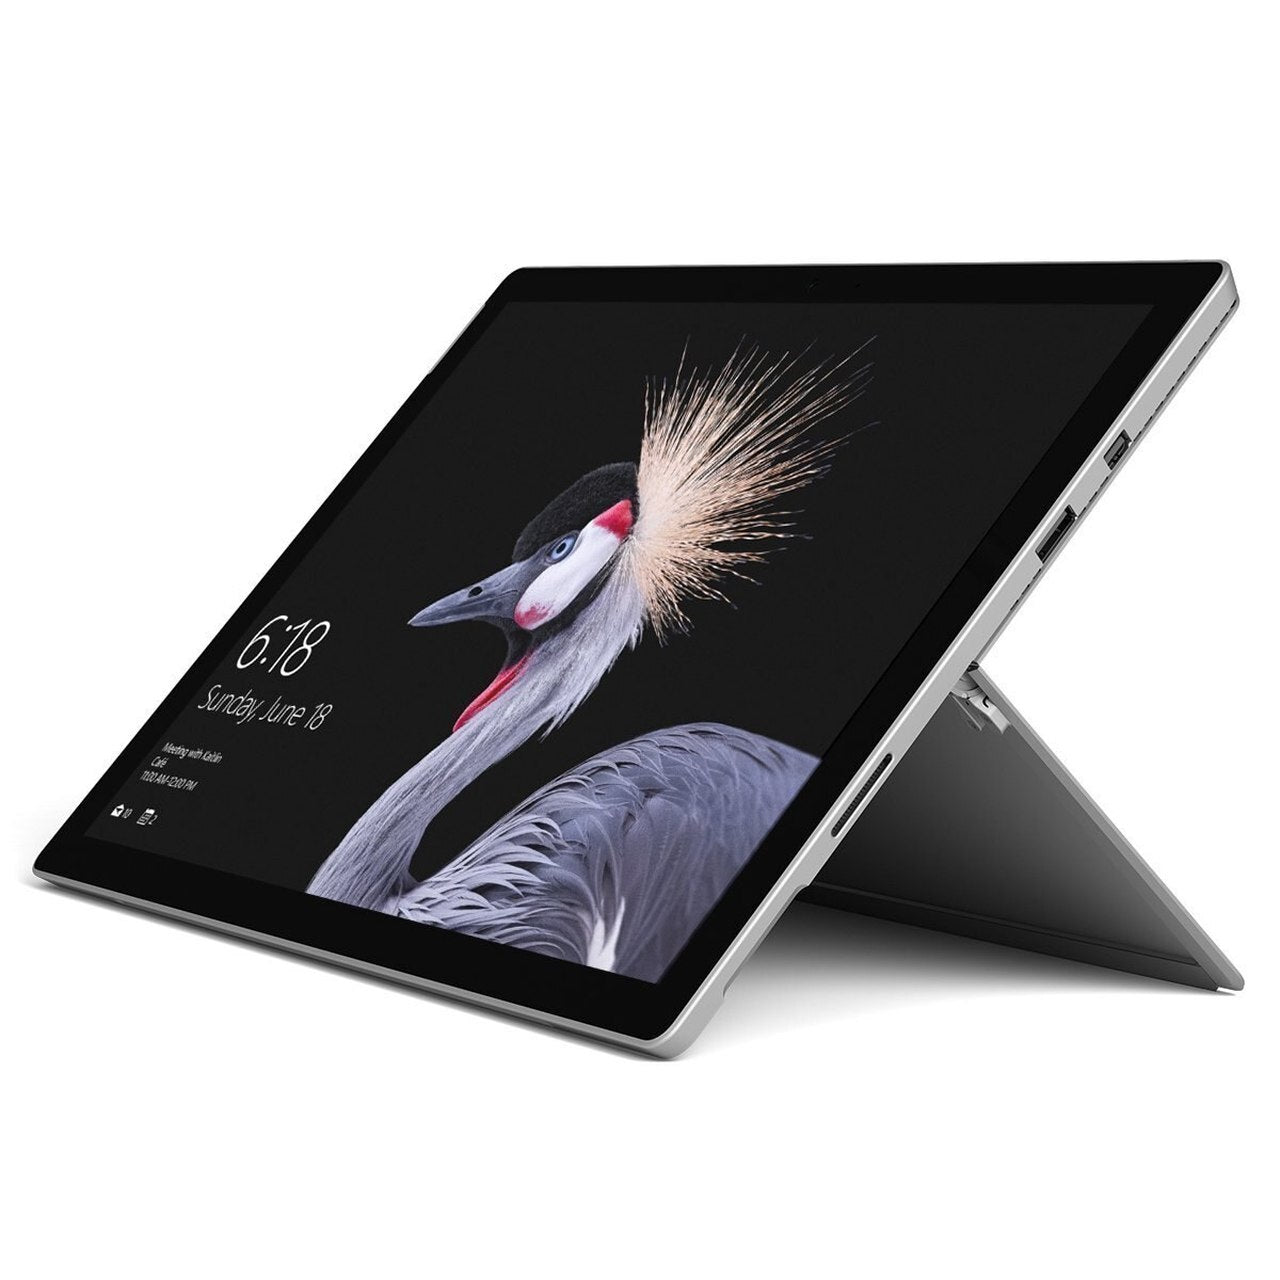 Microsoft Surface Pro 4 renewed refurbished